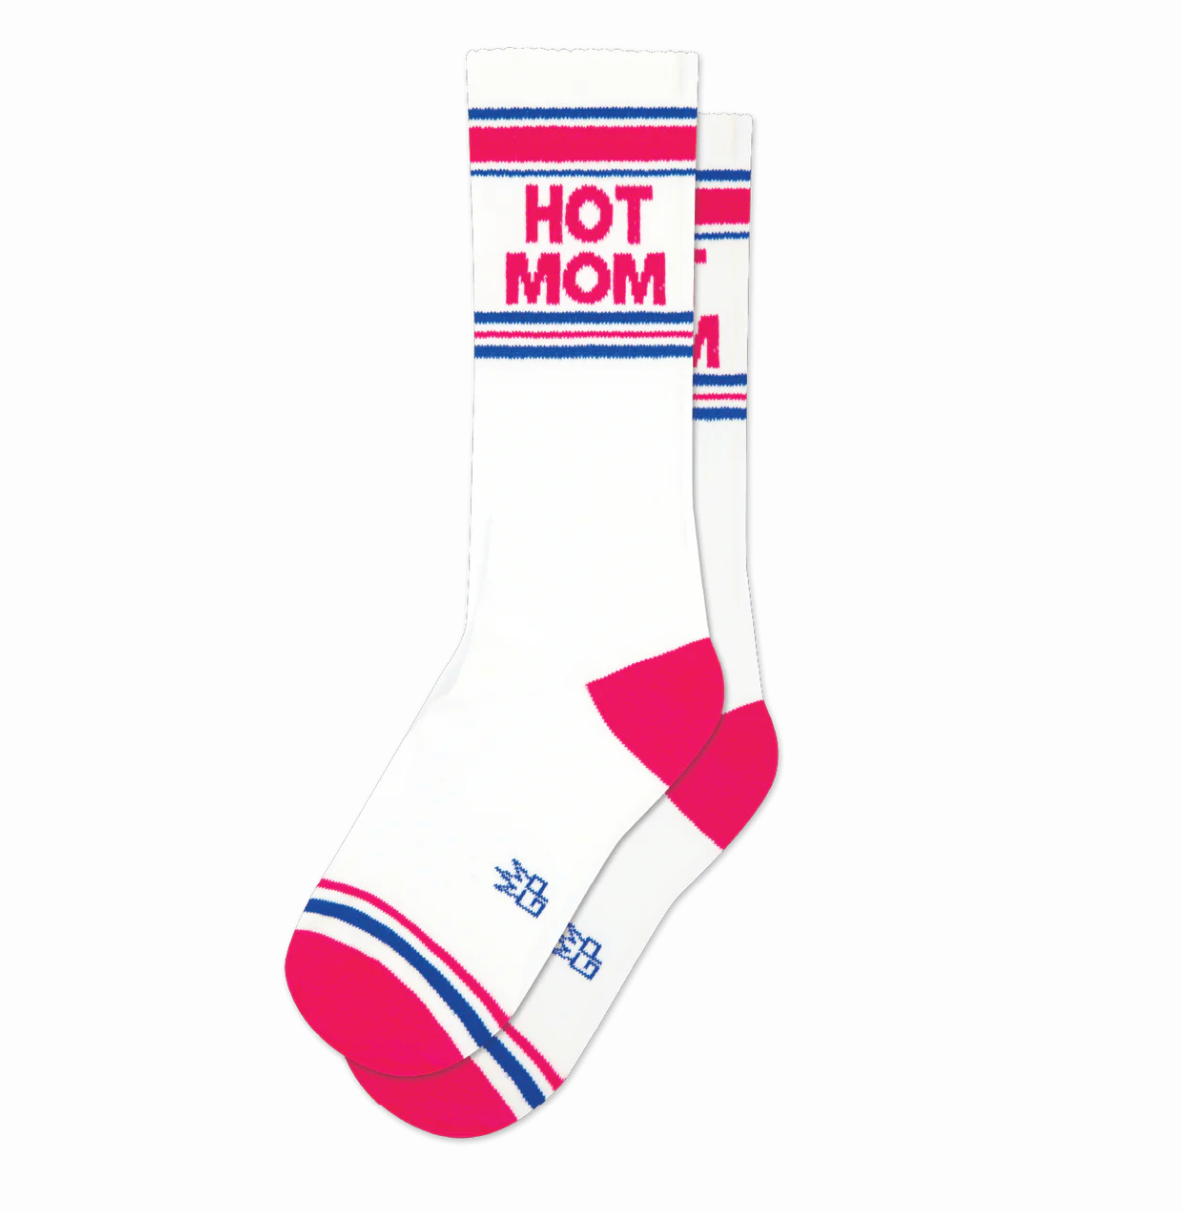 GUMBALL POODLE- Hot Mom socks